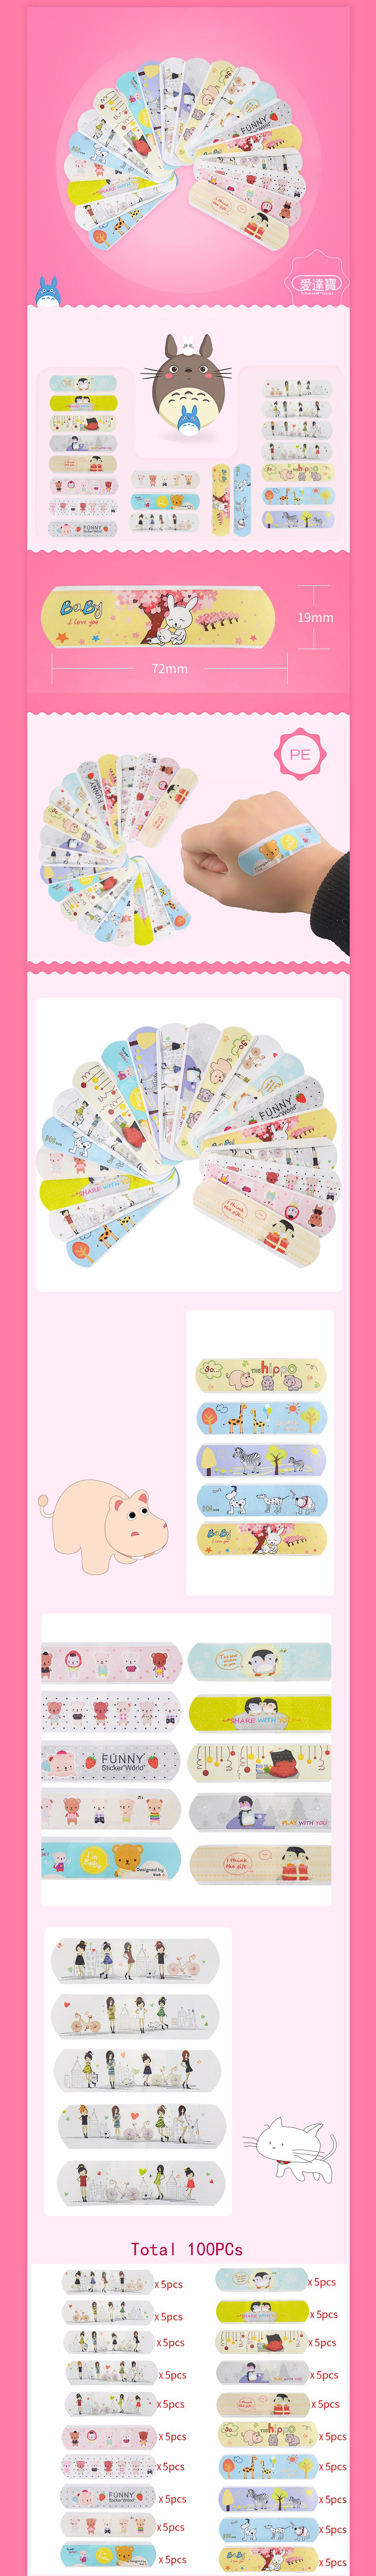 100Pcs-Waterproof-Breathable-Cute-Cartoon-Band-Aid-Emergency-Kit-For-Kids-Children-1171924